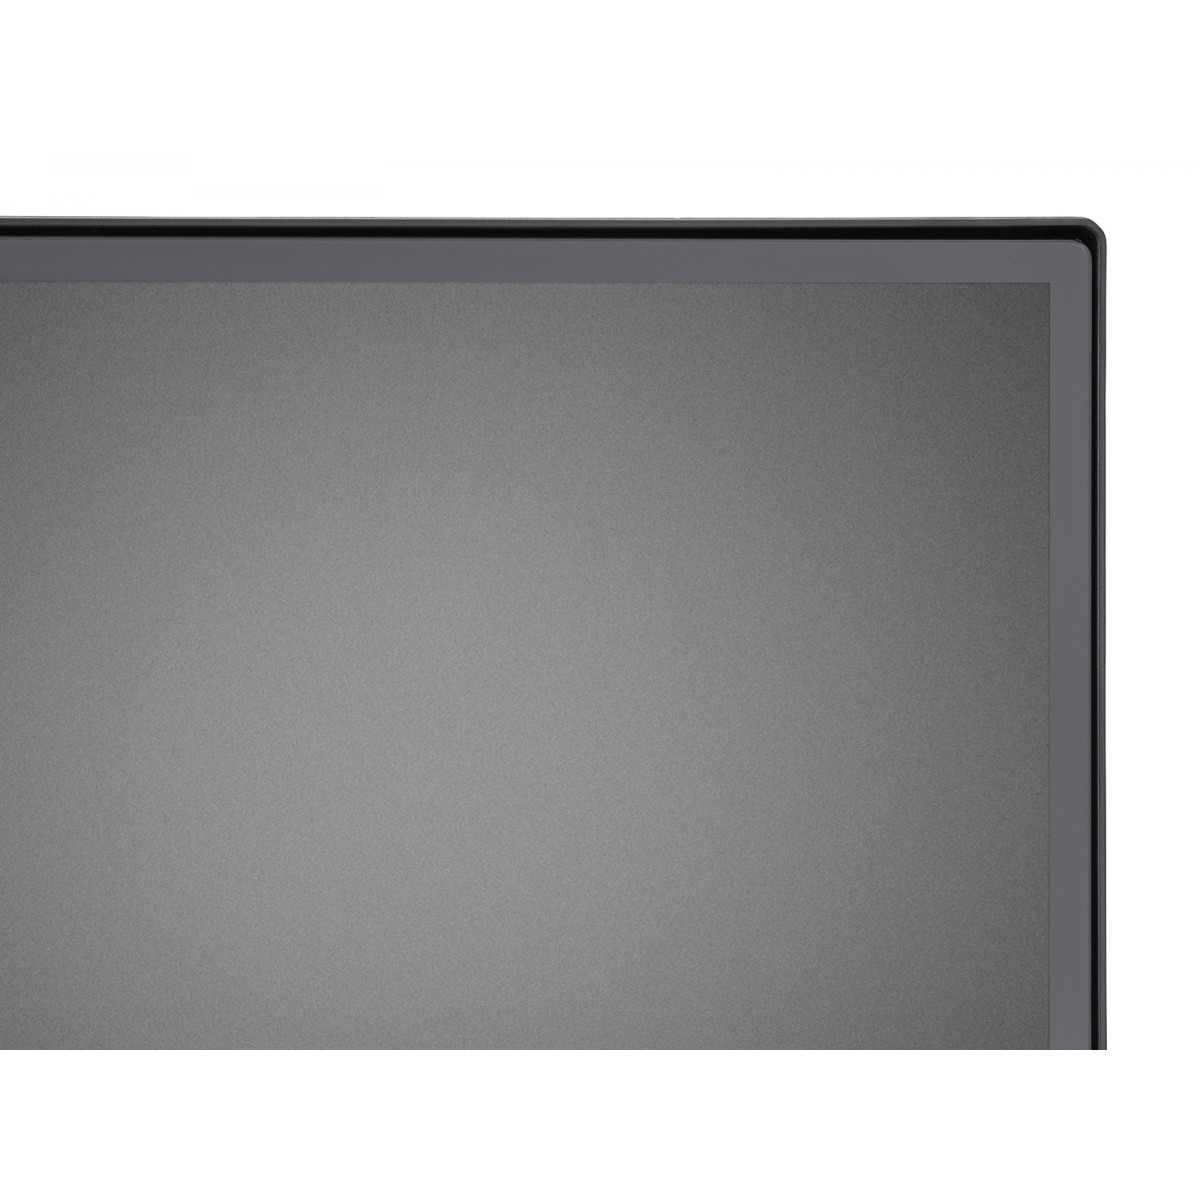 NEC Display MultiSync E271N 68.6 cm/27 Flat Screen - 1,920x1,080 IPS